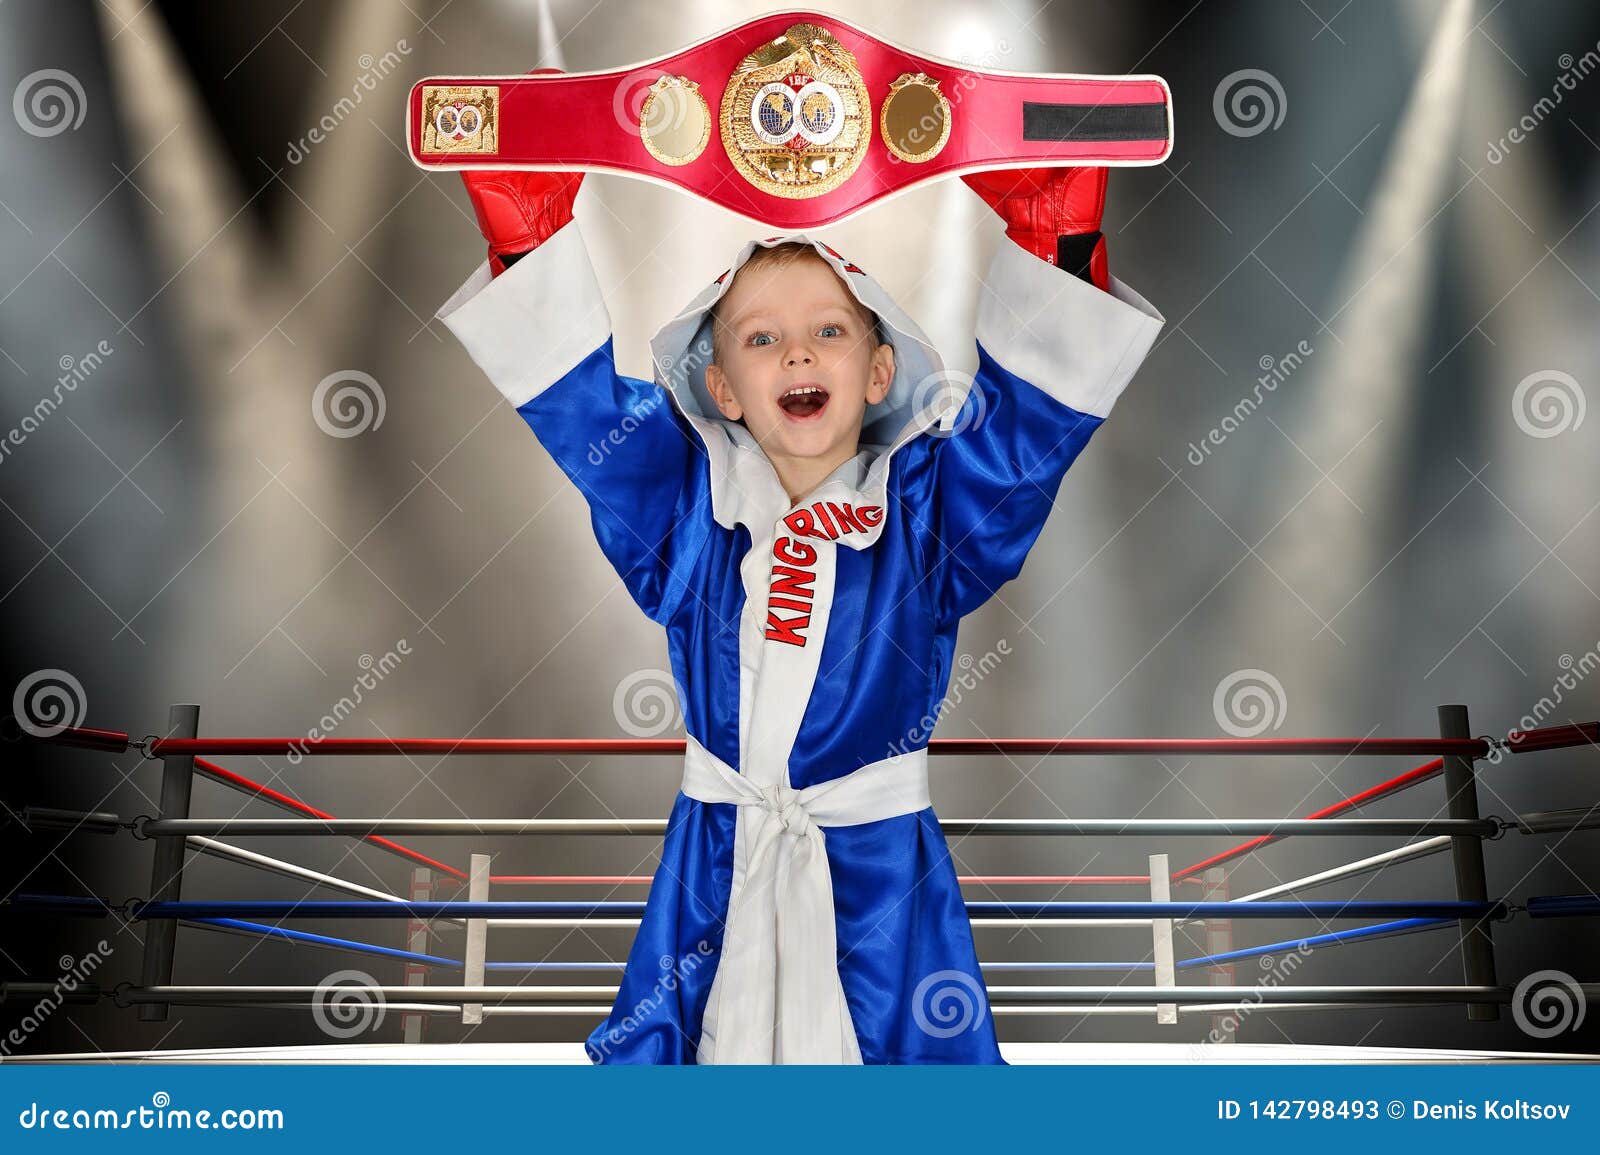 champion little boy